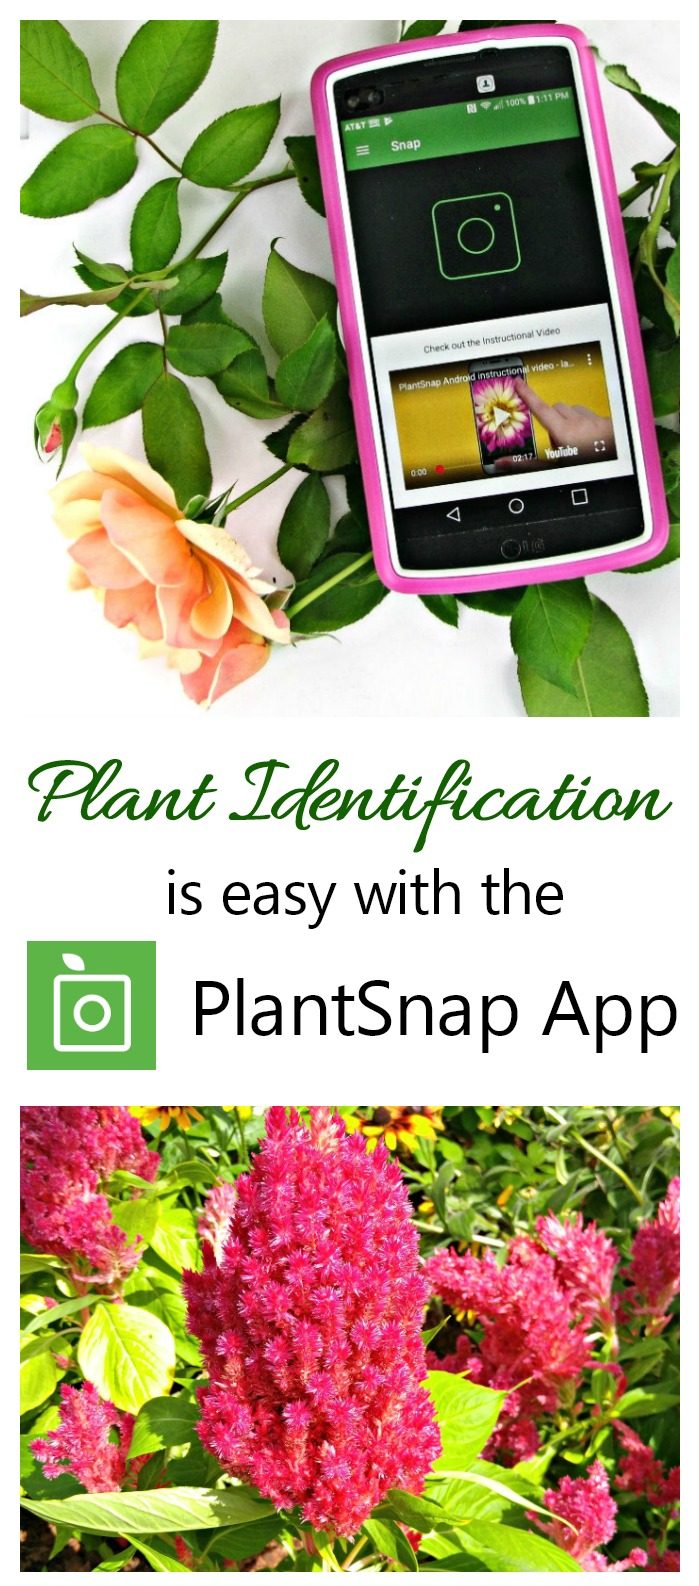 PlantSnap ಮೊಬೈಲ್ ಅಪ್ಲಿಕೇಶನ್ - ಉತ್ತಮ ಫಲಿತಾಂಶಗಳಿಗಾಗಿ ಸಲಹೆಗಳು ಮತ್ತು ತಂತ್ರಗಳು